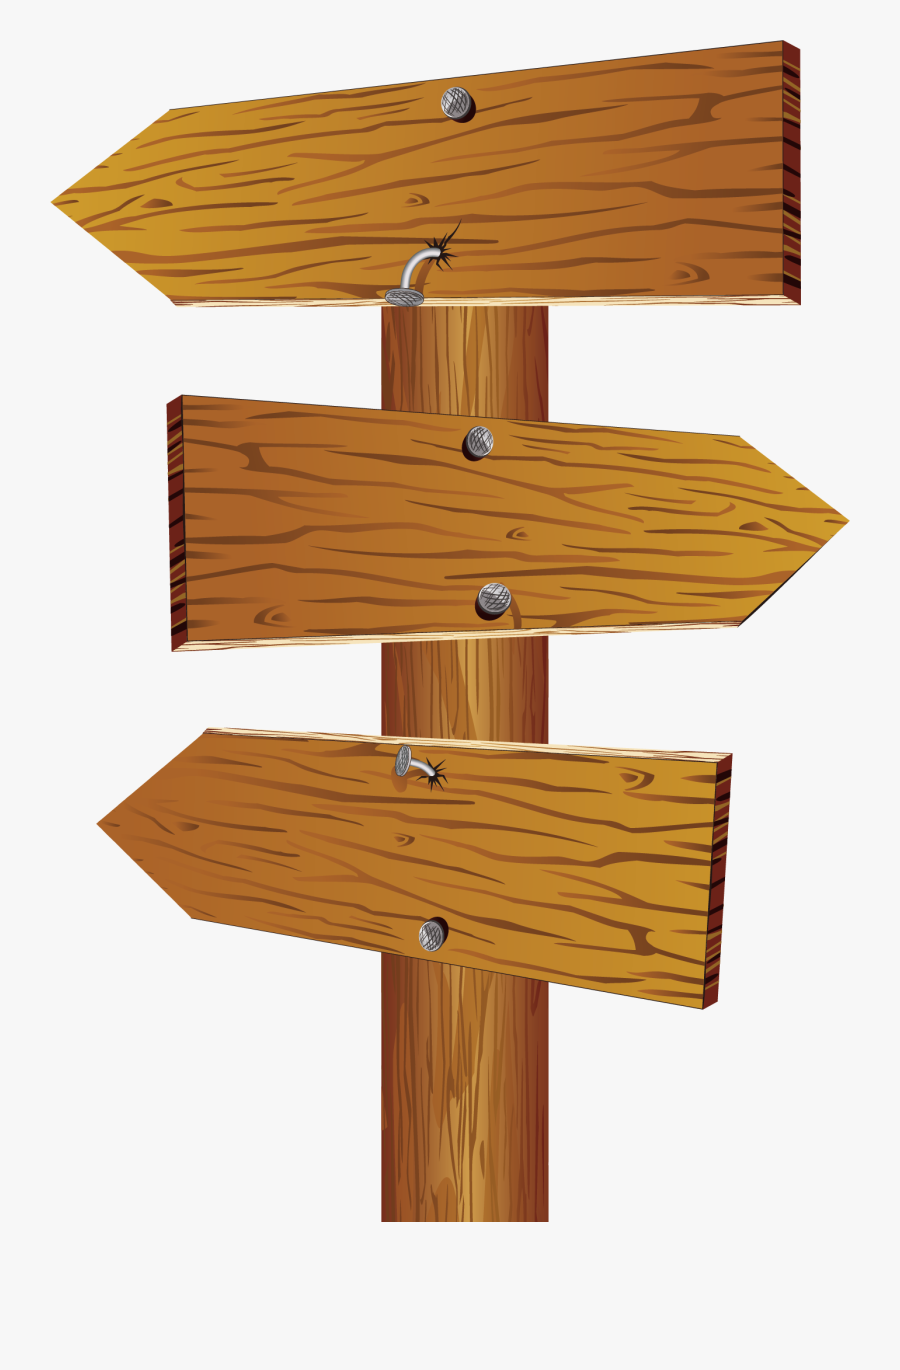 Sign Clip Art Wooden - Transparent Background Wooden Arrow Clipart, Transparent Clipart